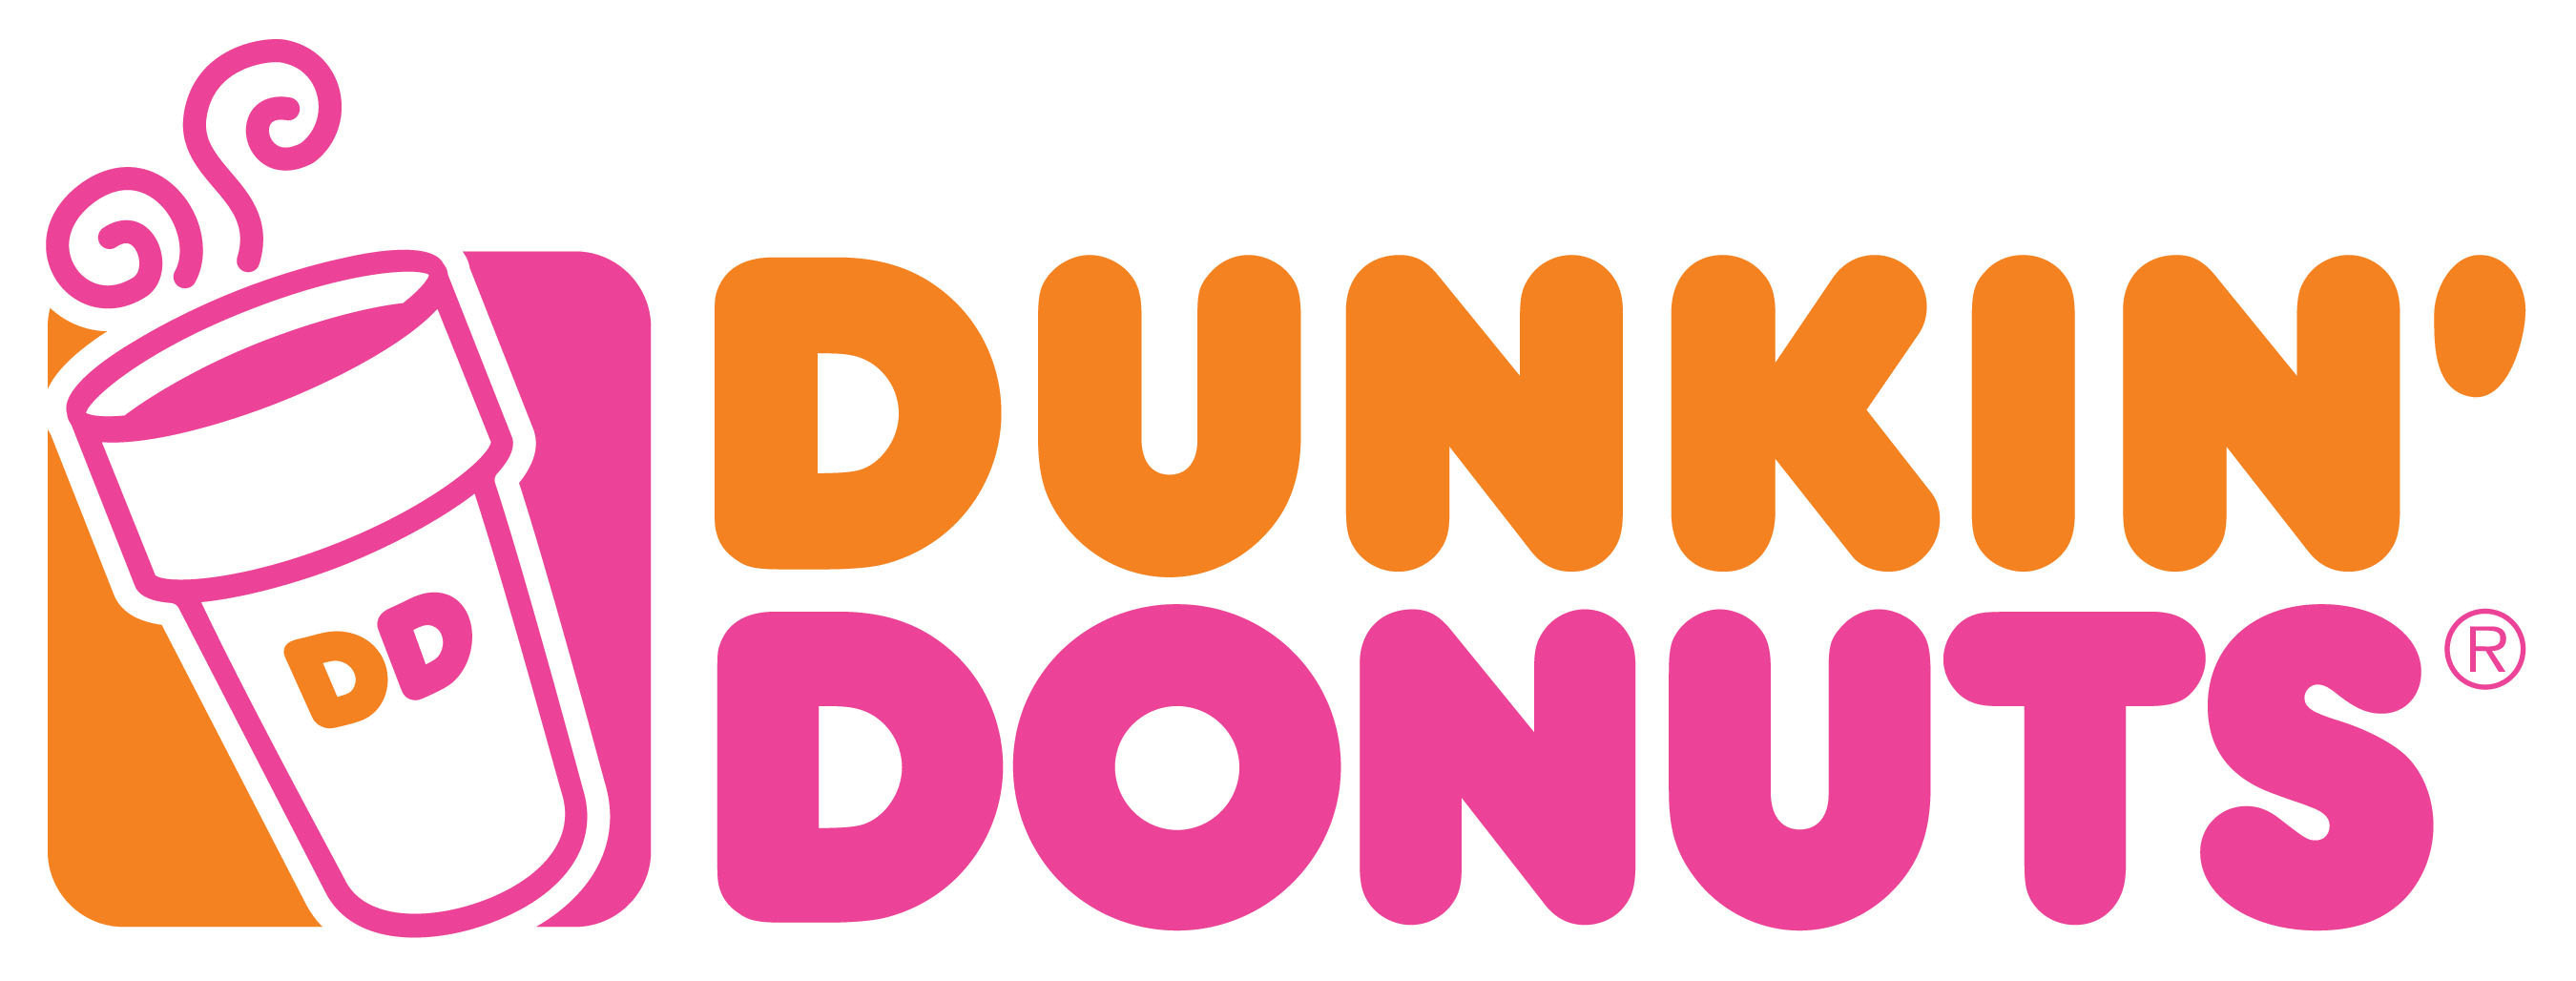 dunkin donuts announces plans to develop restaurants in turkey